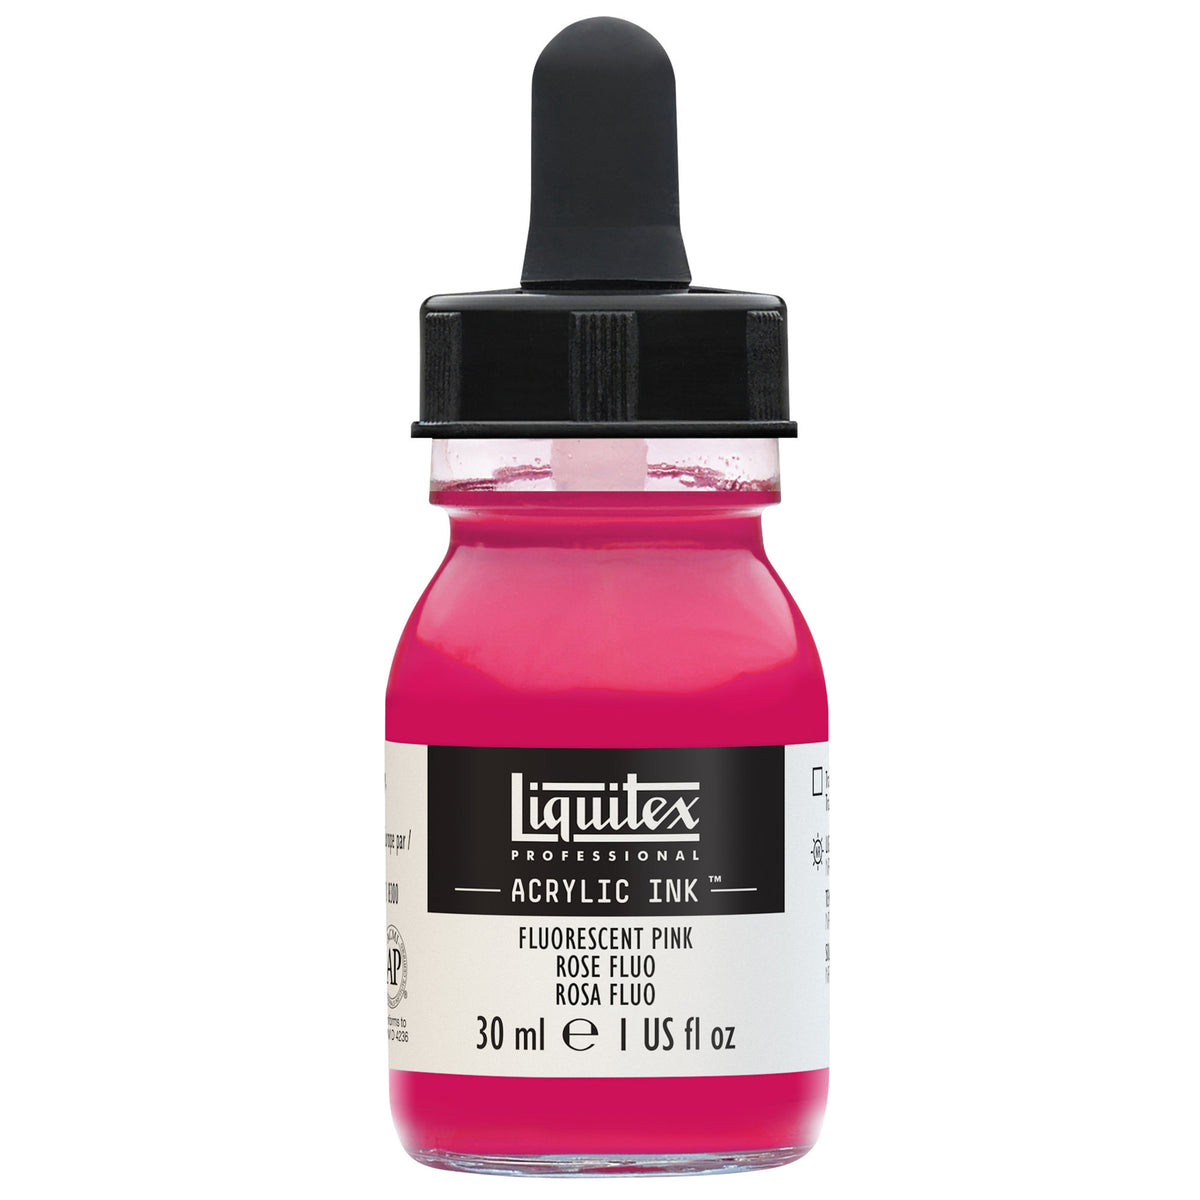 Liquitex Ink! Explore Pouring Primary Color Set